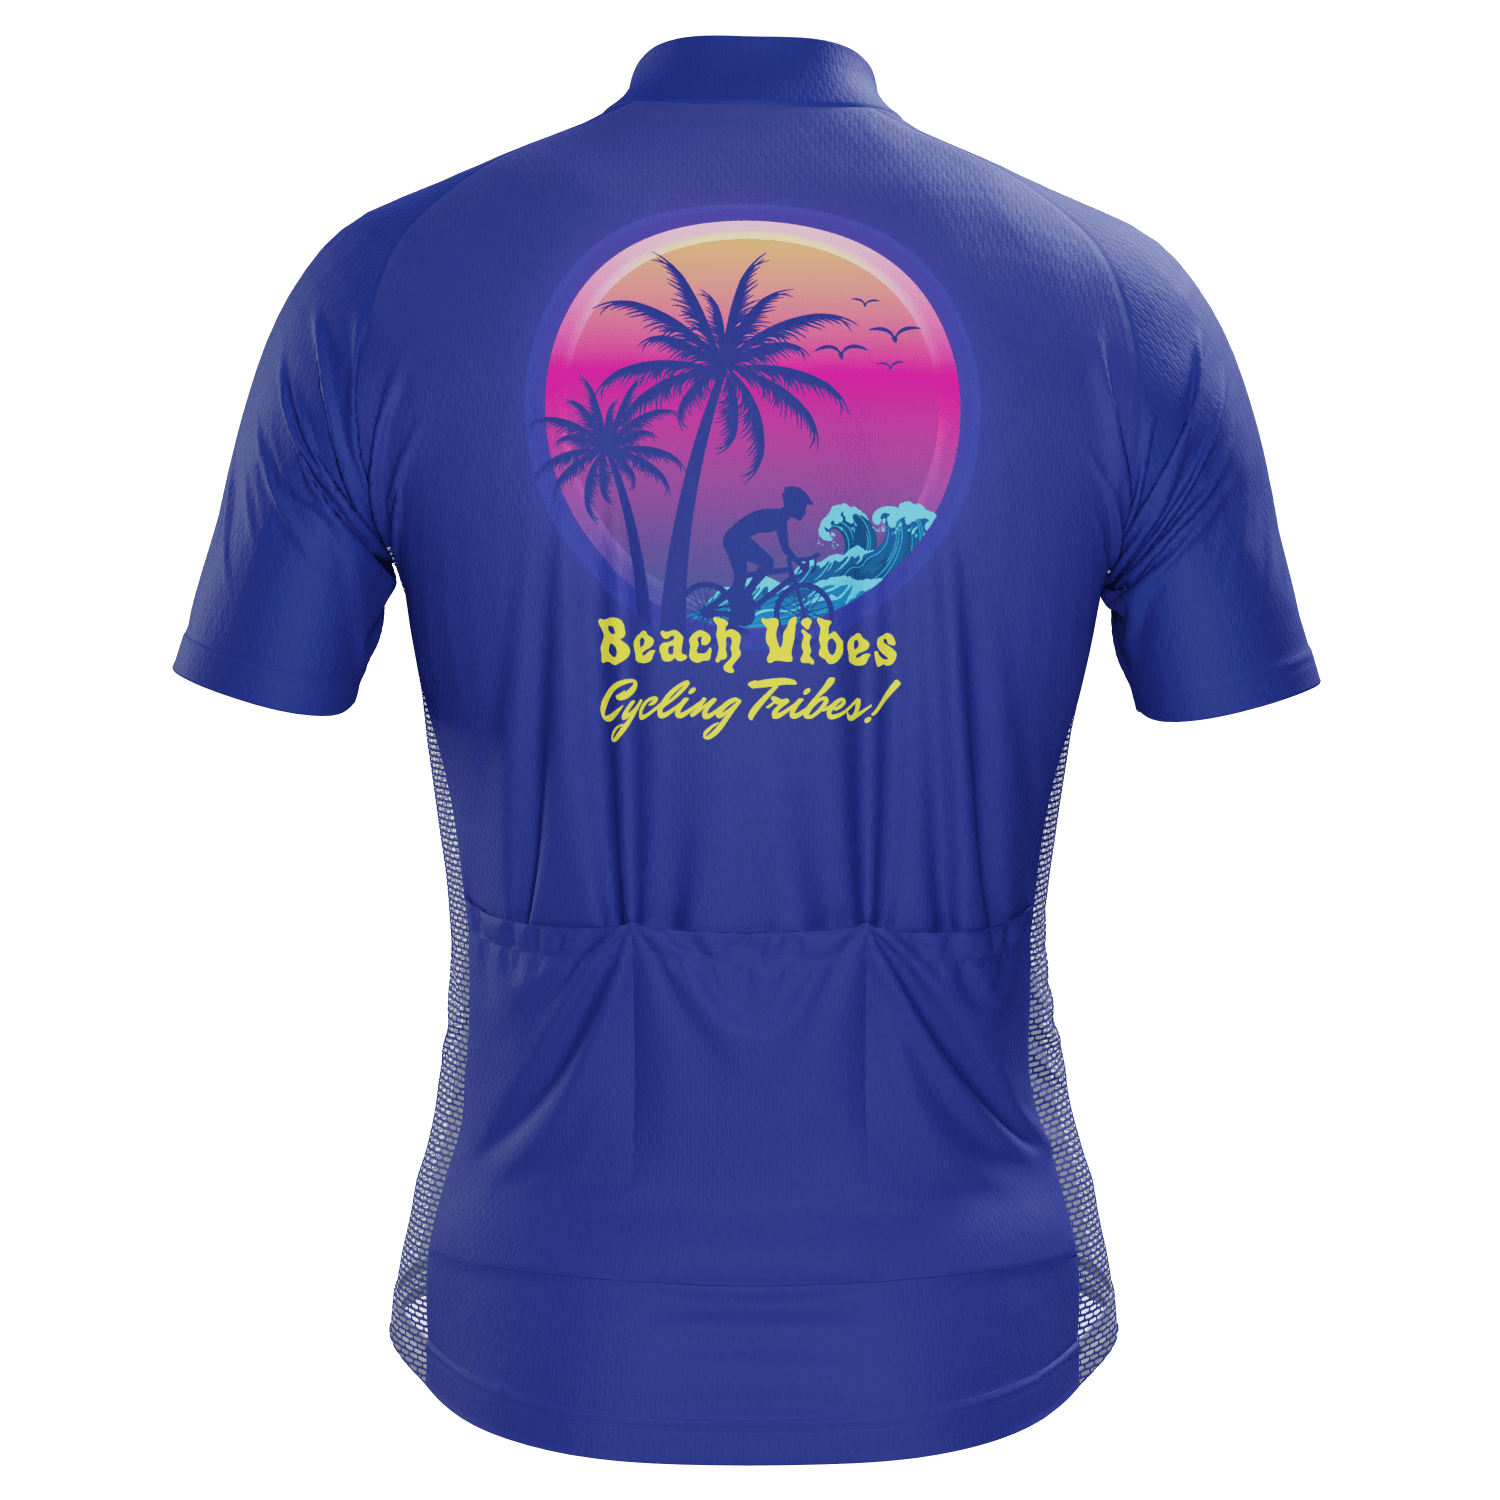 Men's Retrowave Sunset Short Sleeve Cycling Jersey